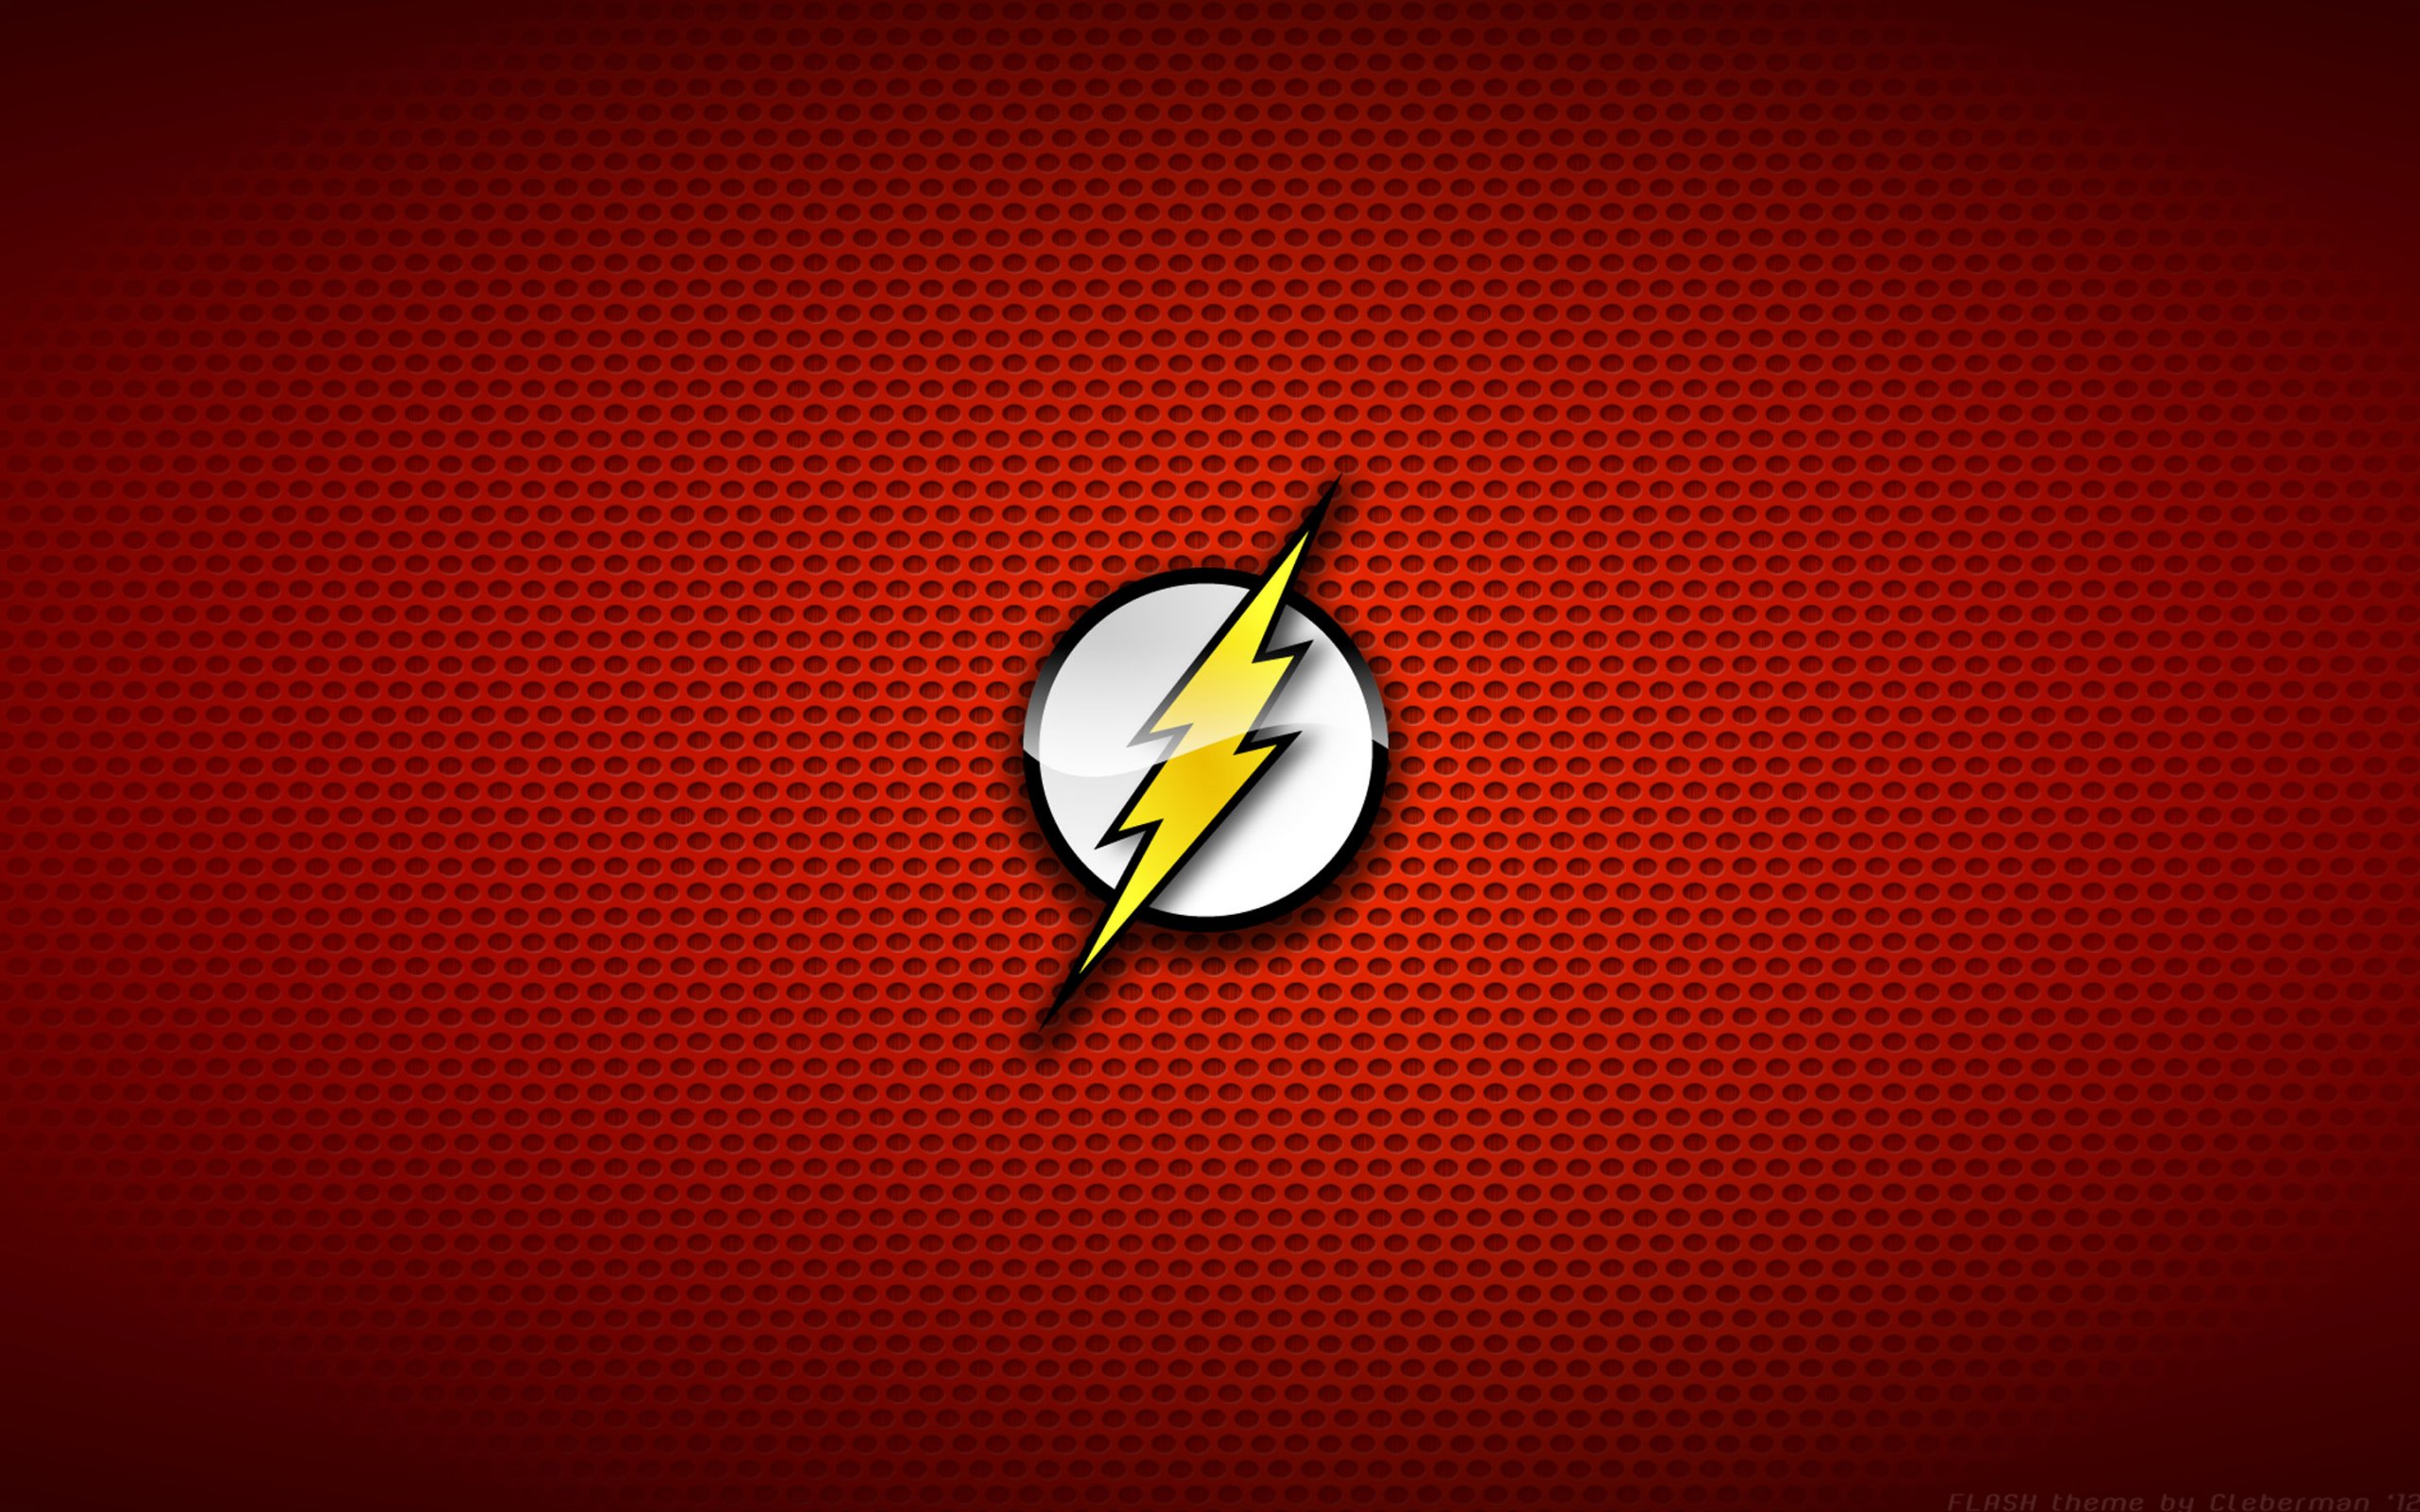 The Flash Logo Wallpaper HD Image Gallery